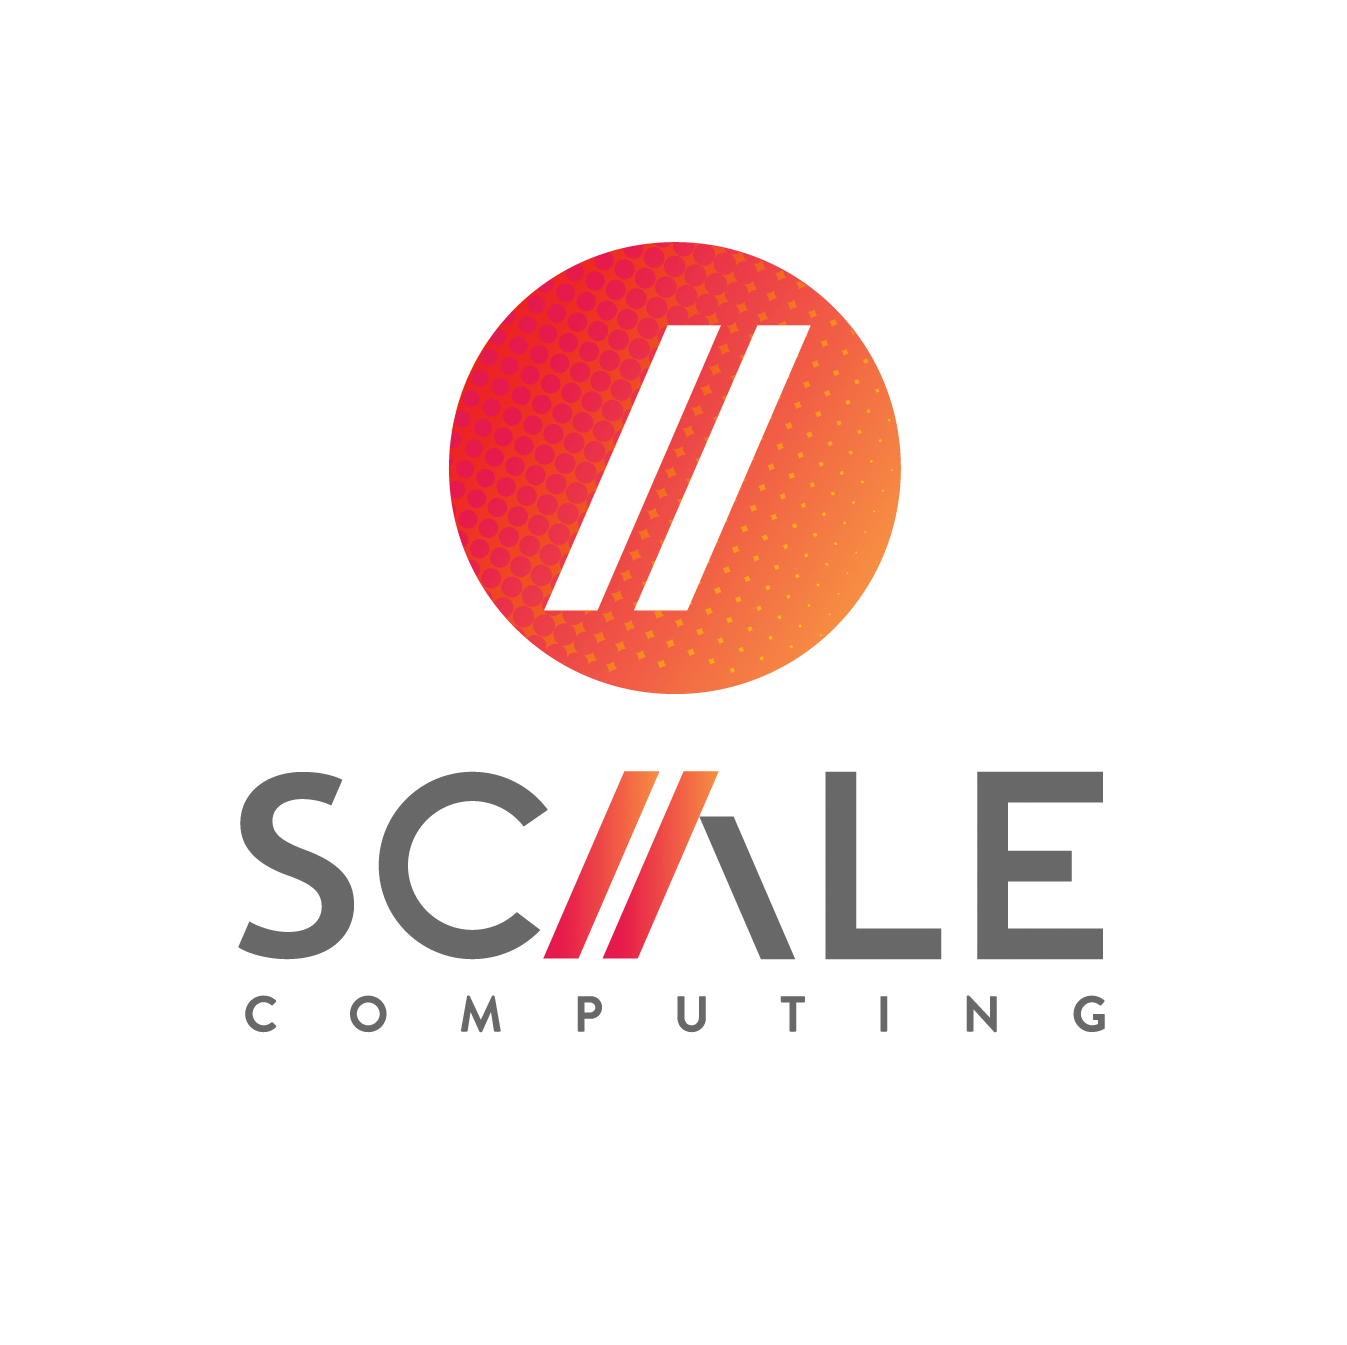 scale computing logo